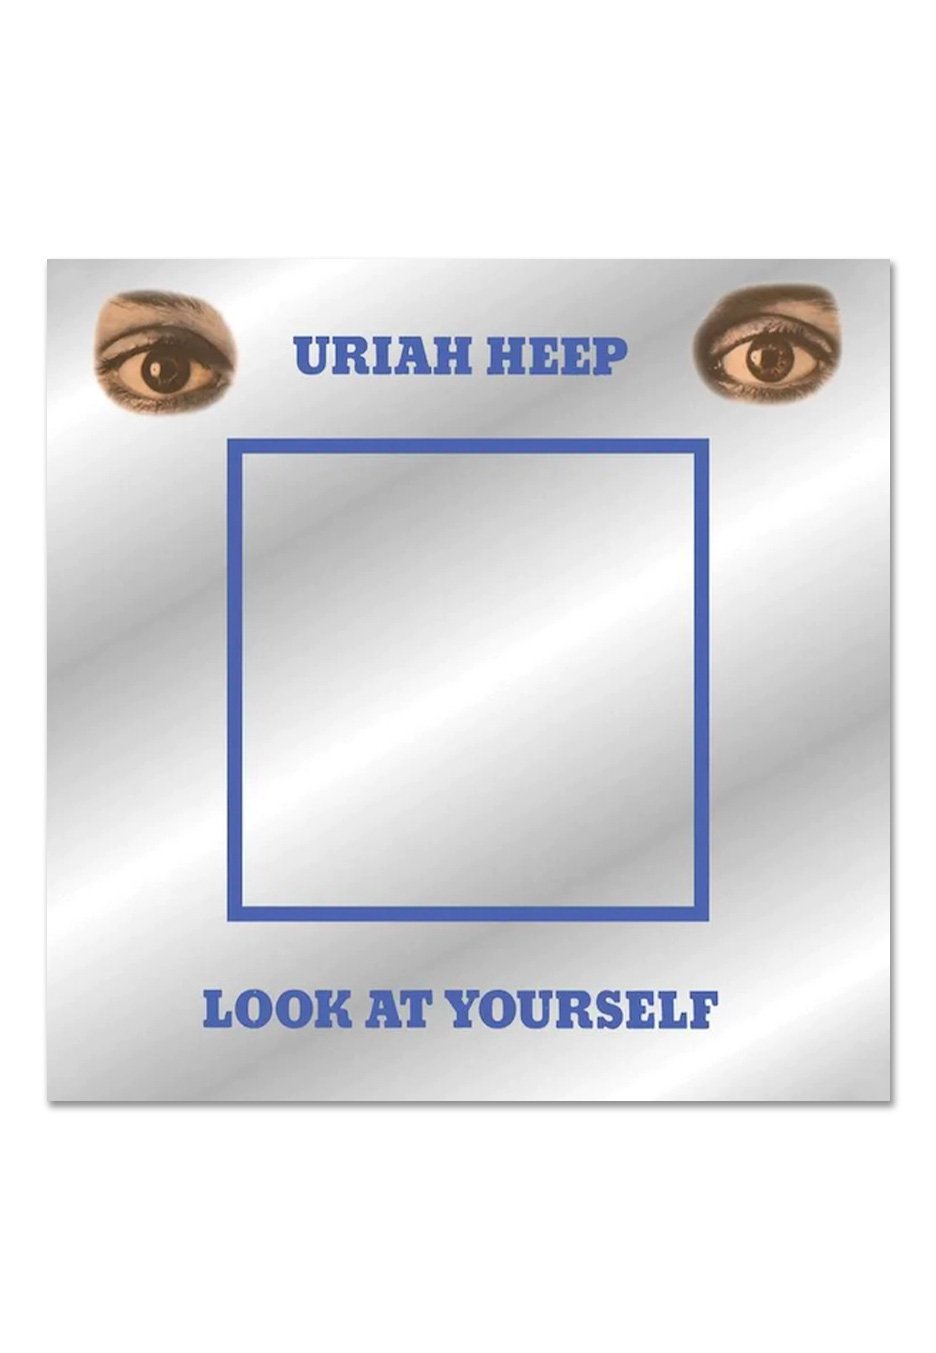 Uriah Heep - Look At Yourself - Picture Vinyl